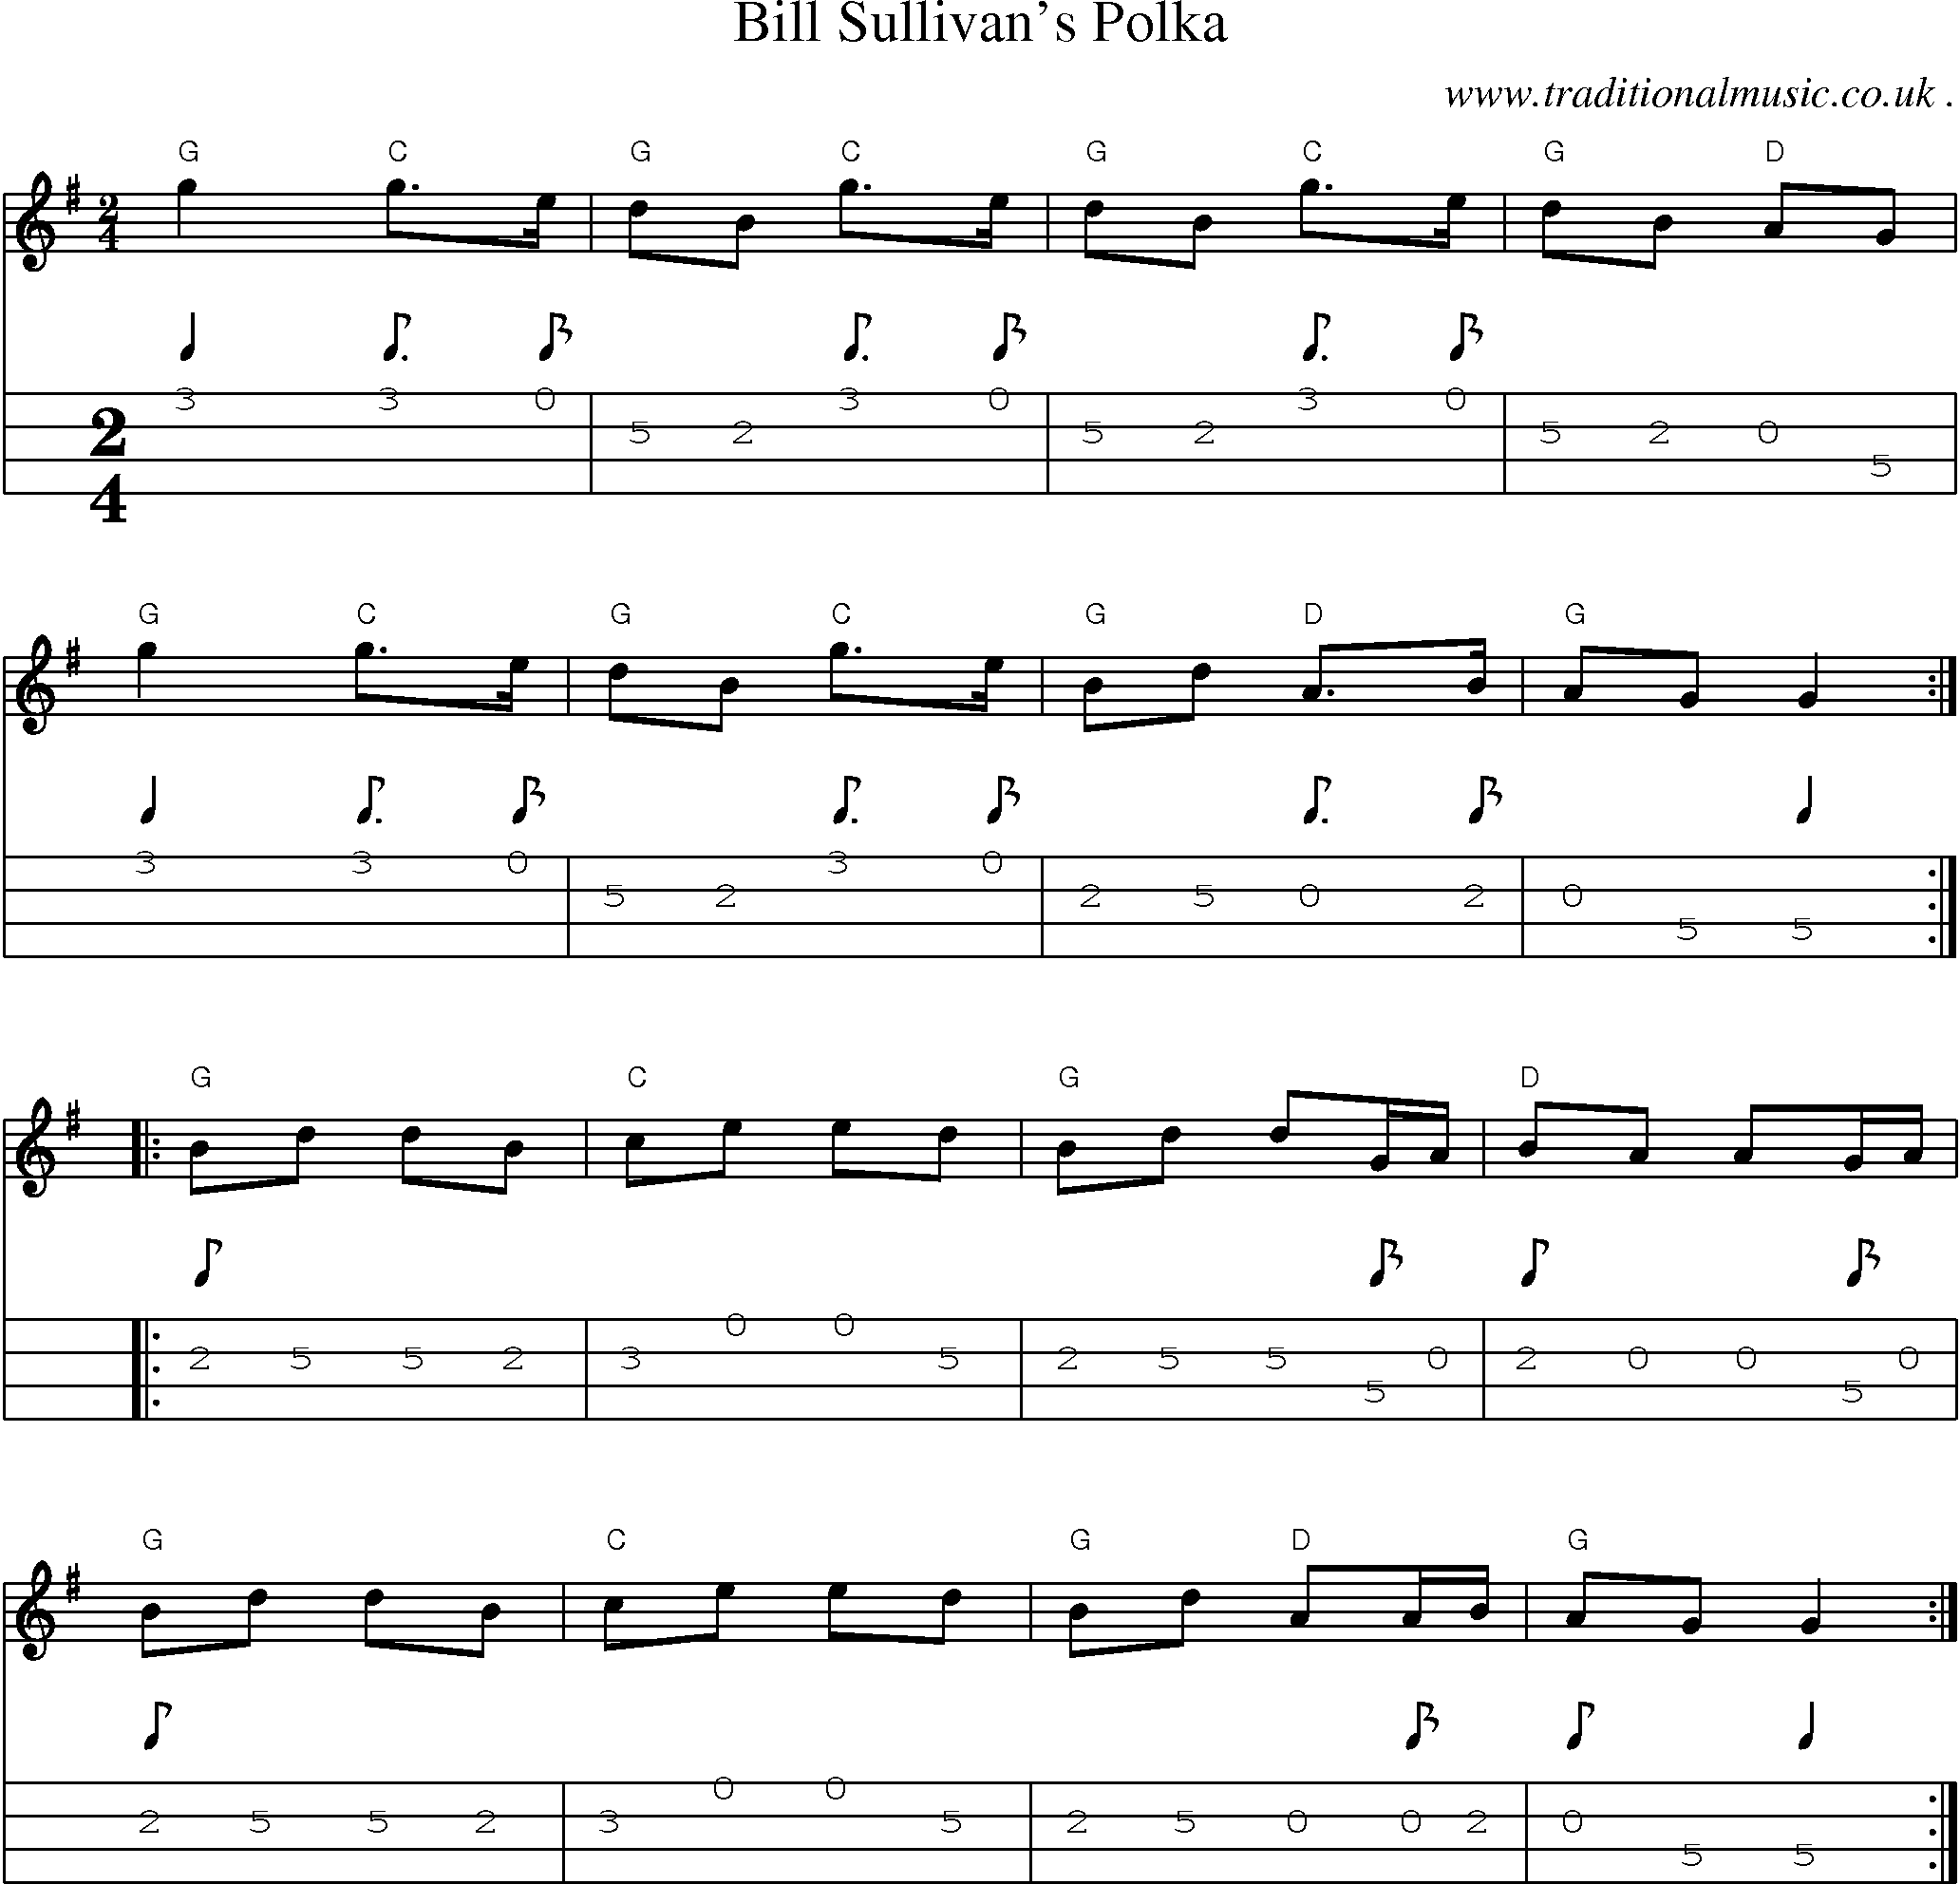 Music Score and Guitar Tabs for Bill Sullivans Polka